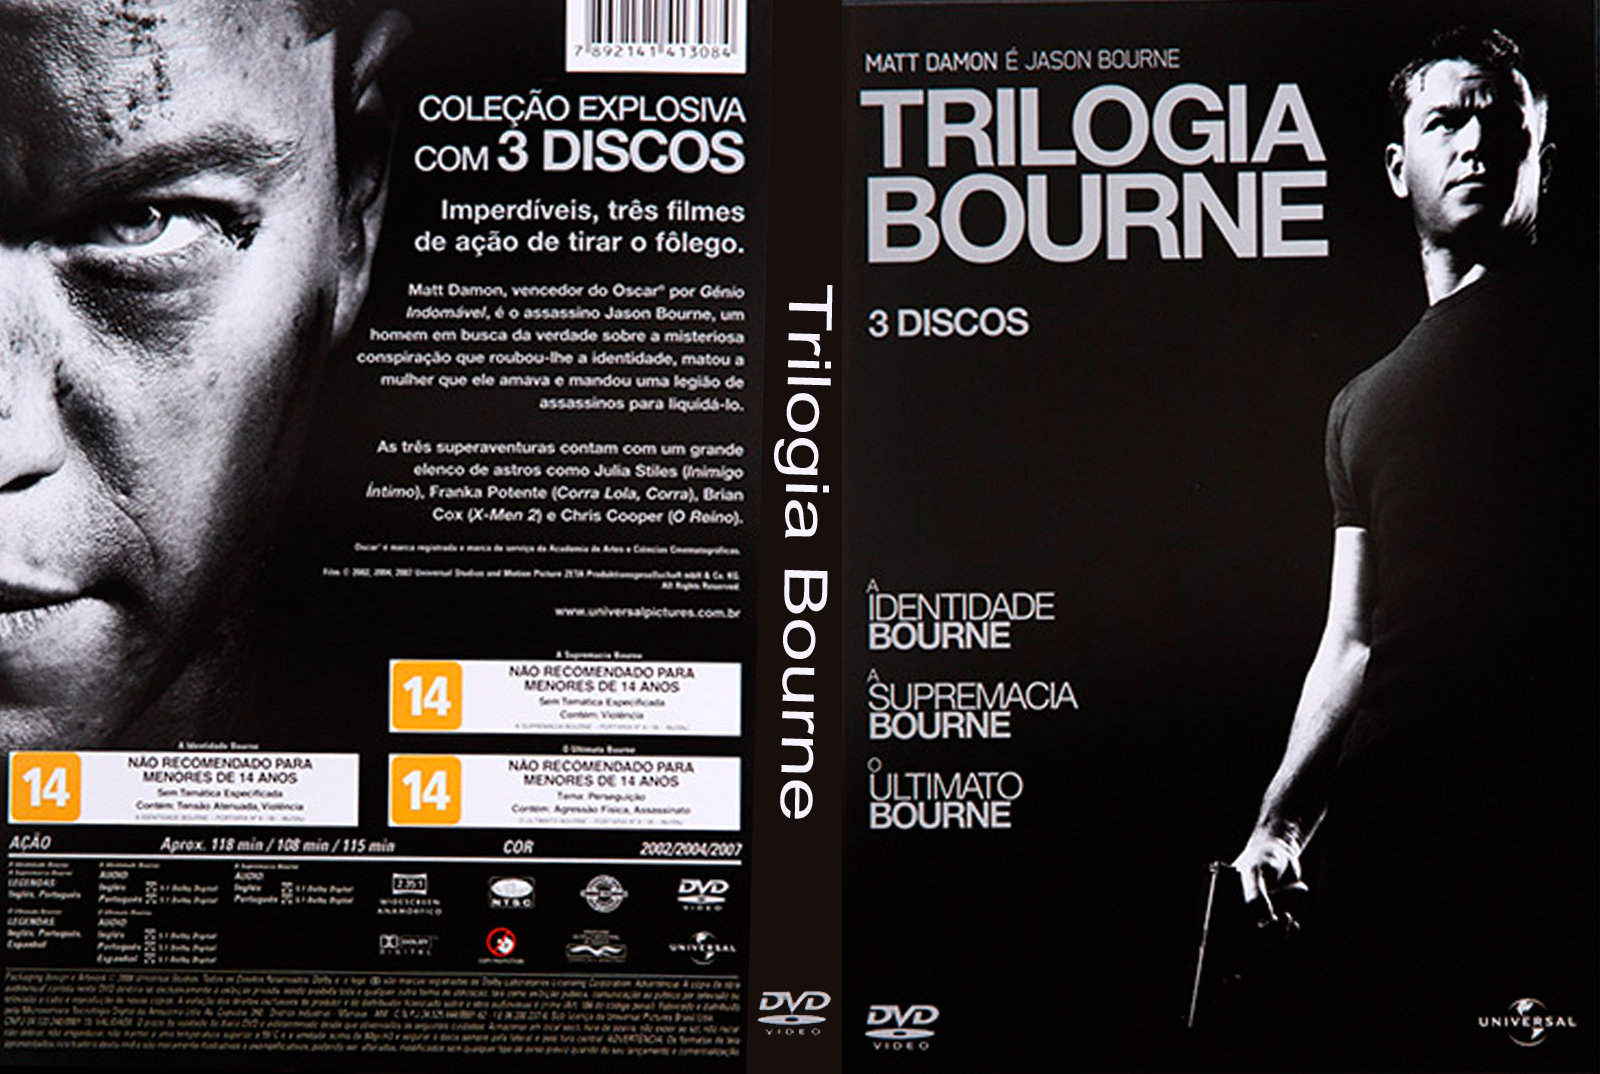 A Identidade Bourne - Dual Audio